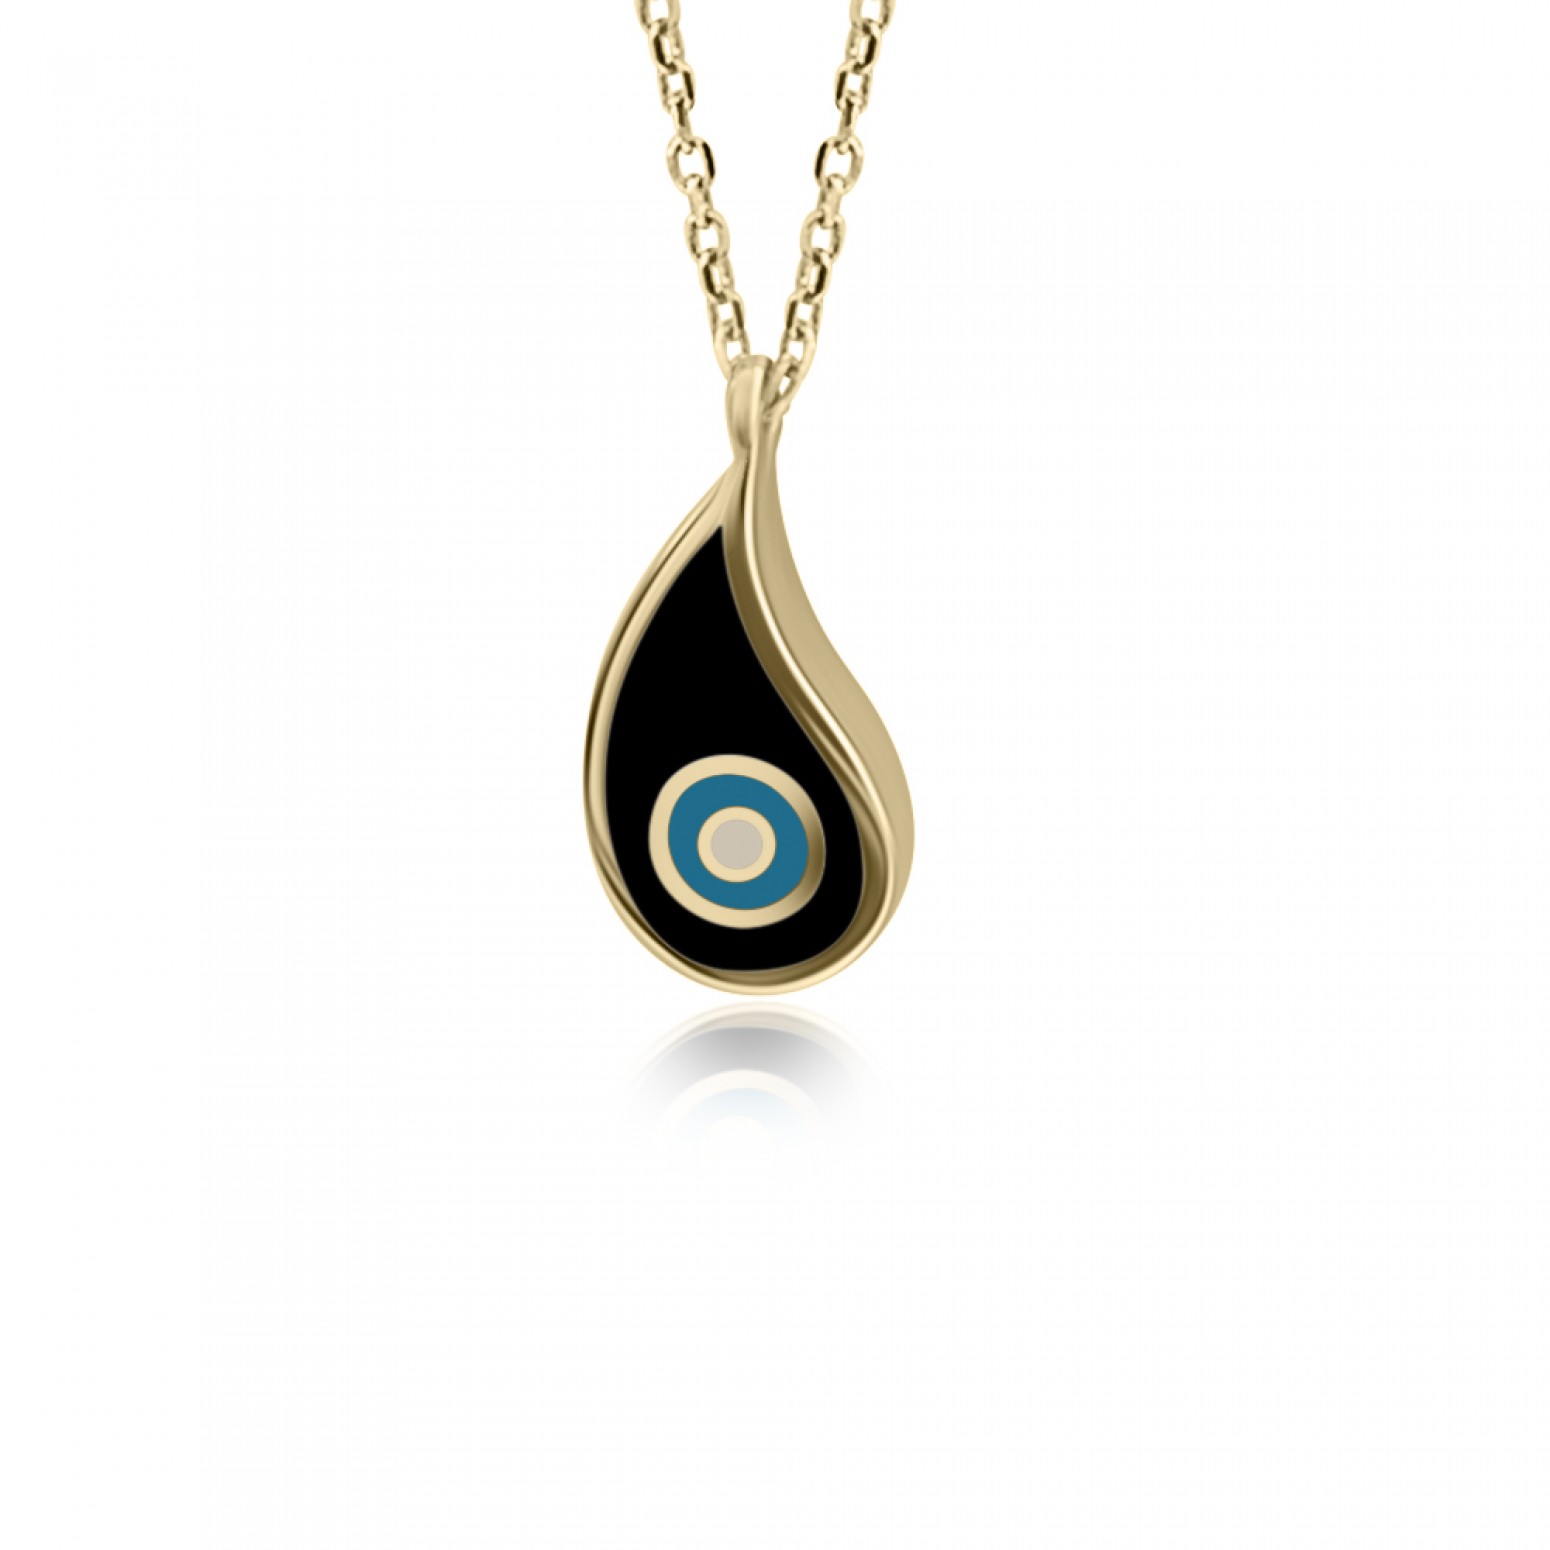 Eye necklace, Κ9 gold with enamel, ko4930 NECKLACES Κοσμηματα - chrilia.gr